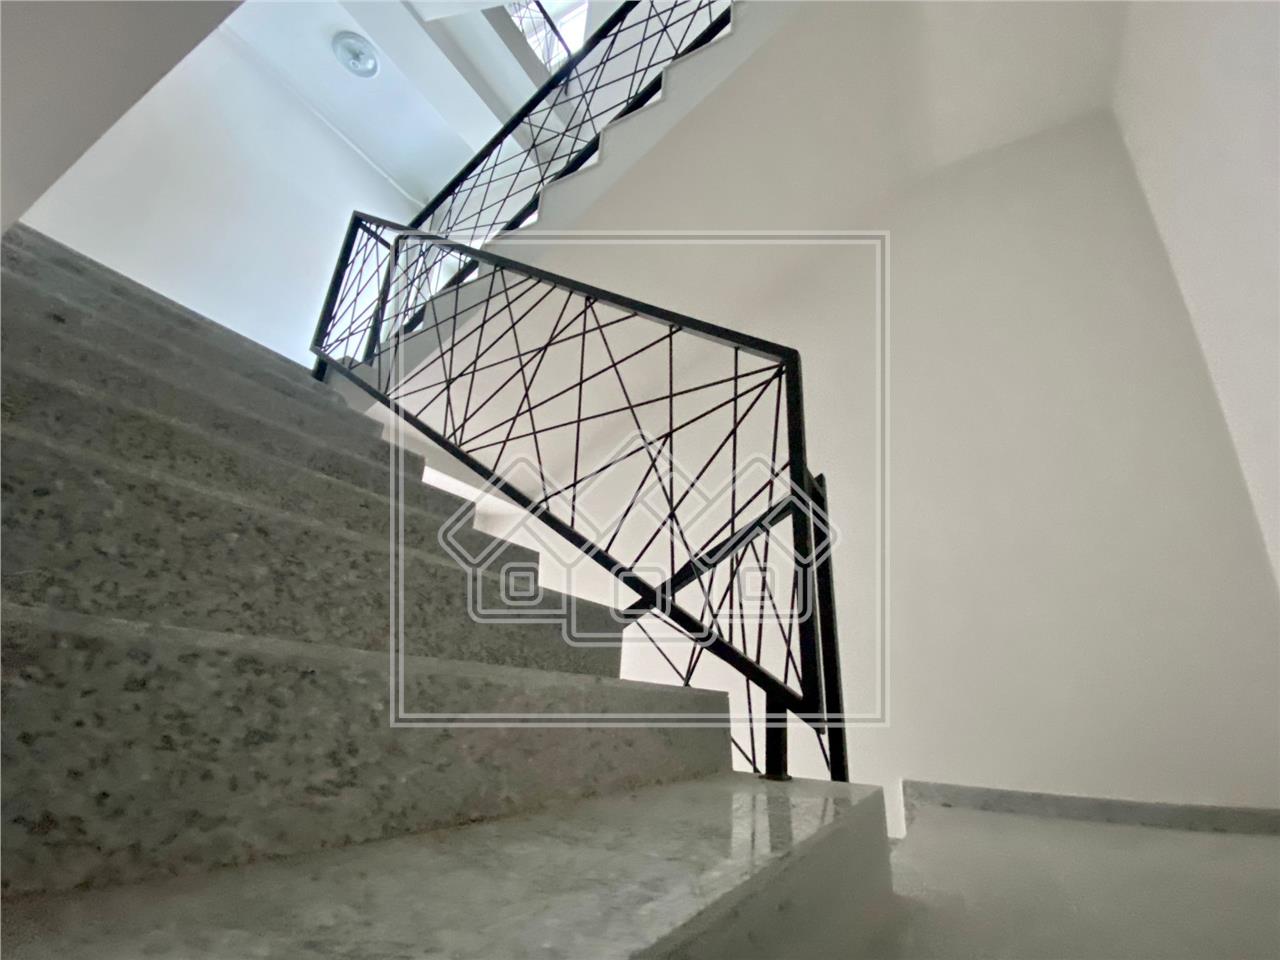 Apartament for sale in Sibiu - 3-room apartment luxury concept